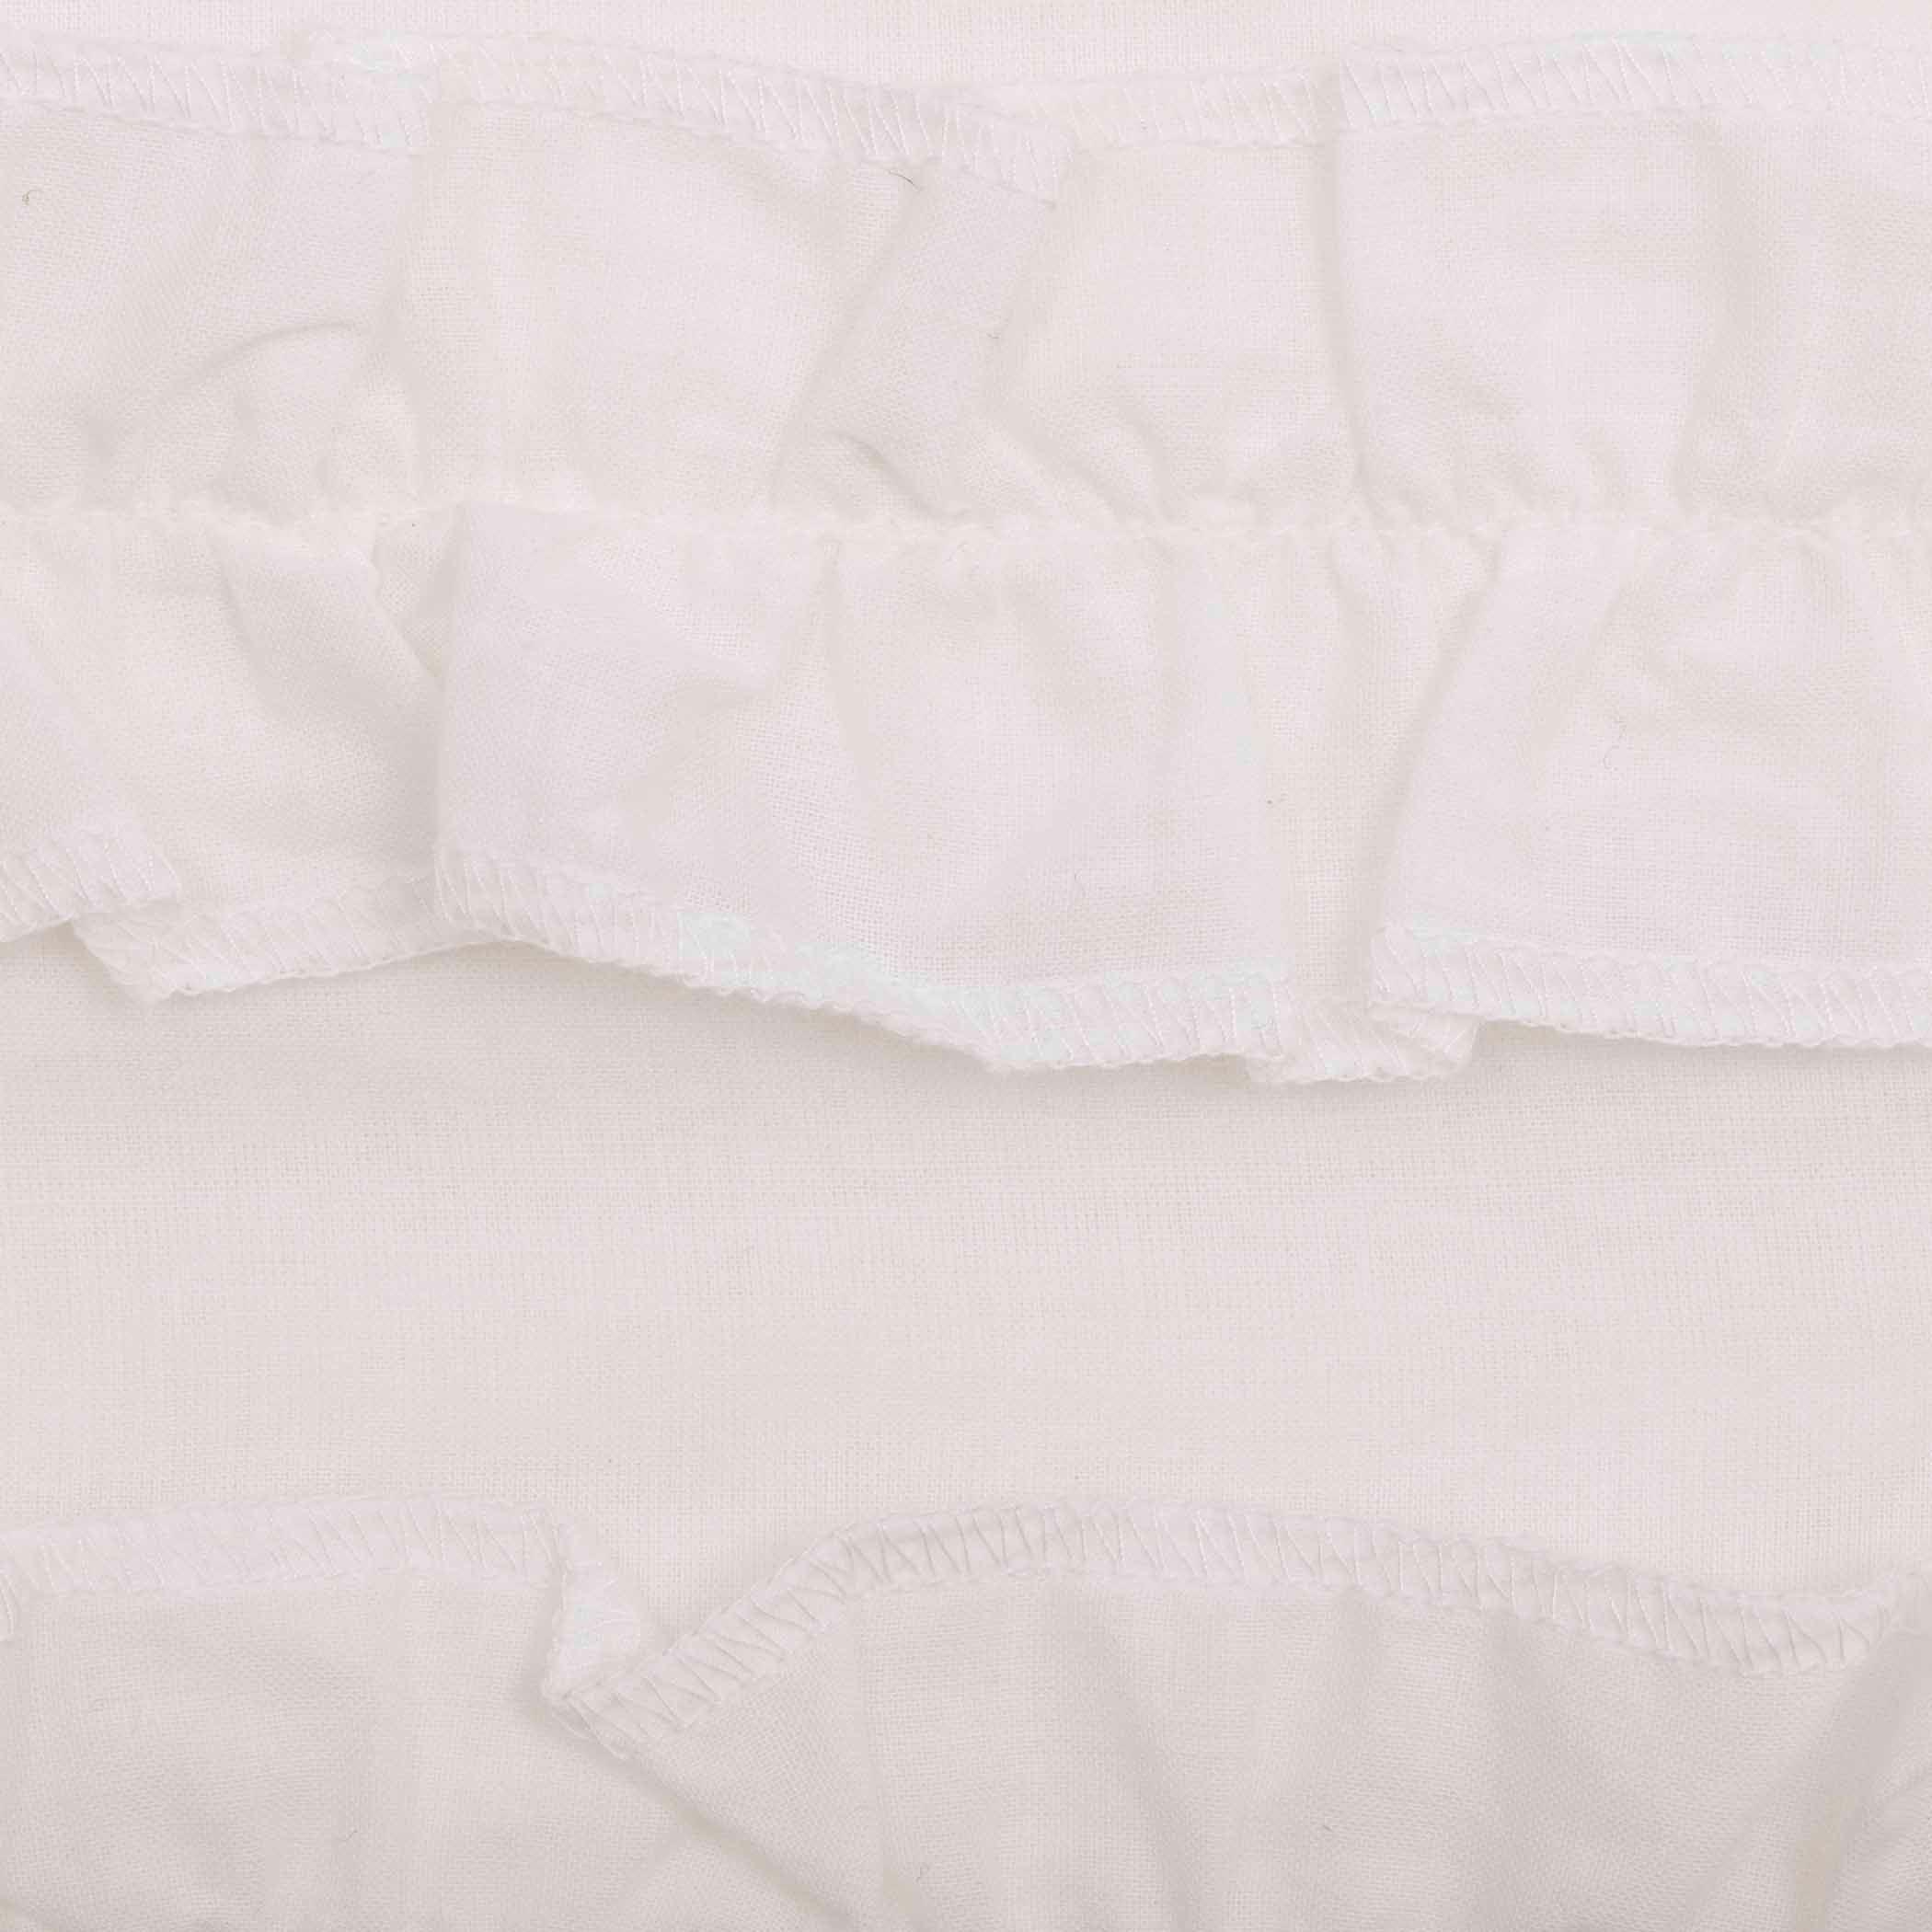 White Ruffled Sheer Petticoat Prairie Swag Curtain Set of 2 - The Fox Decor